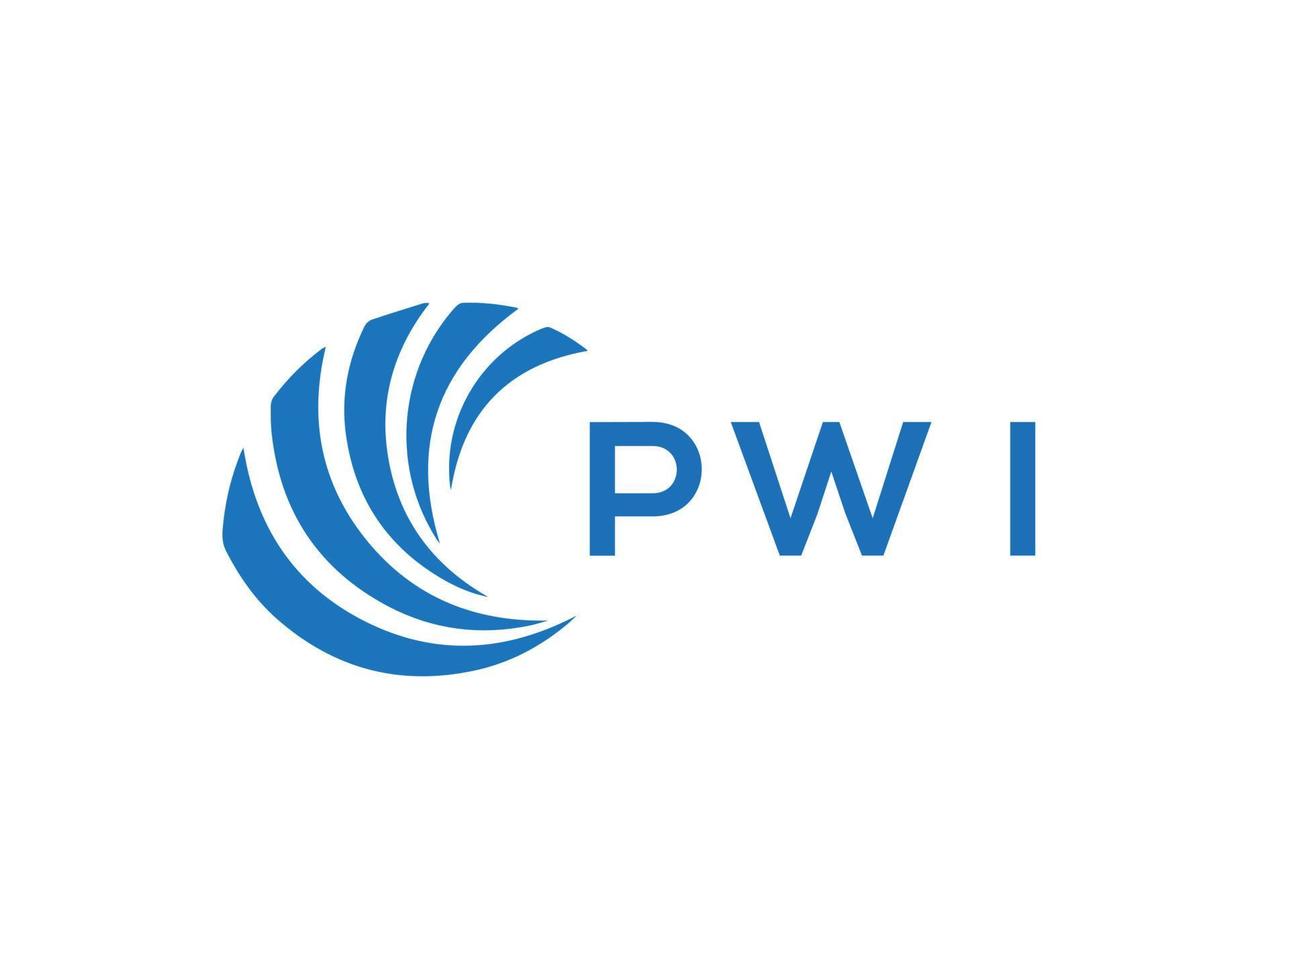 pwi brief logo ontwerp Aan wit achtergrond. pwi creatief cirkel brief logo concept. pwi brief ontwerp. vector